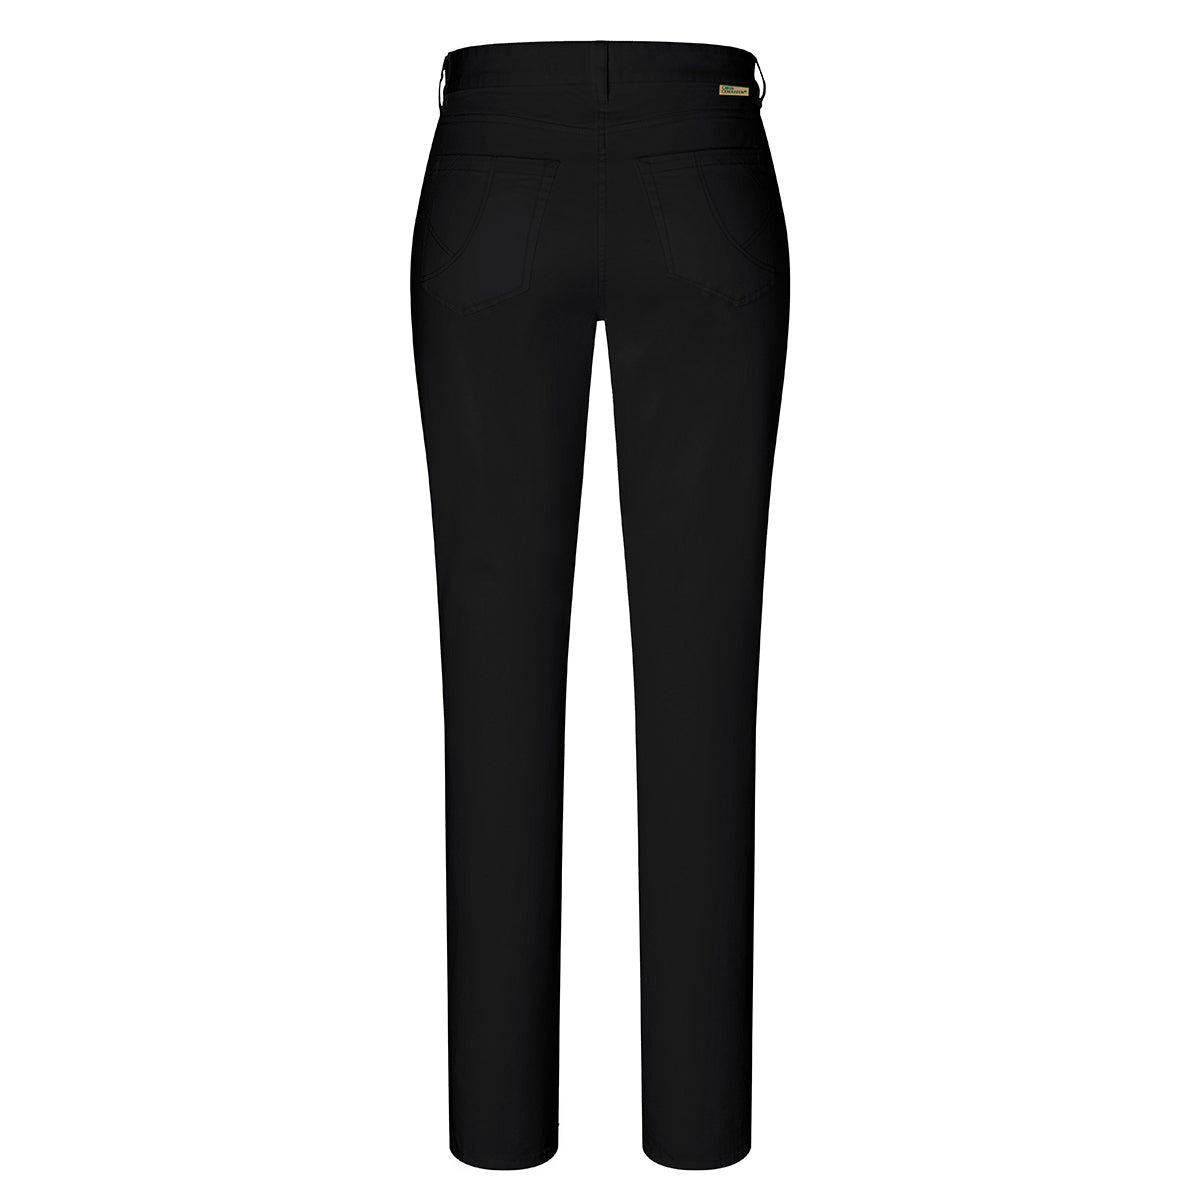 (6 stk.) Karlowsky - 5-lomme bukser til damer - Sort - Størrelse: 48